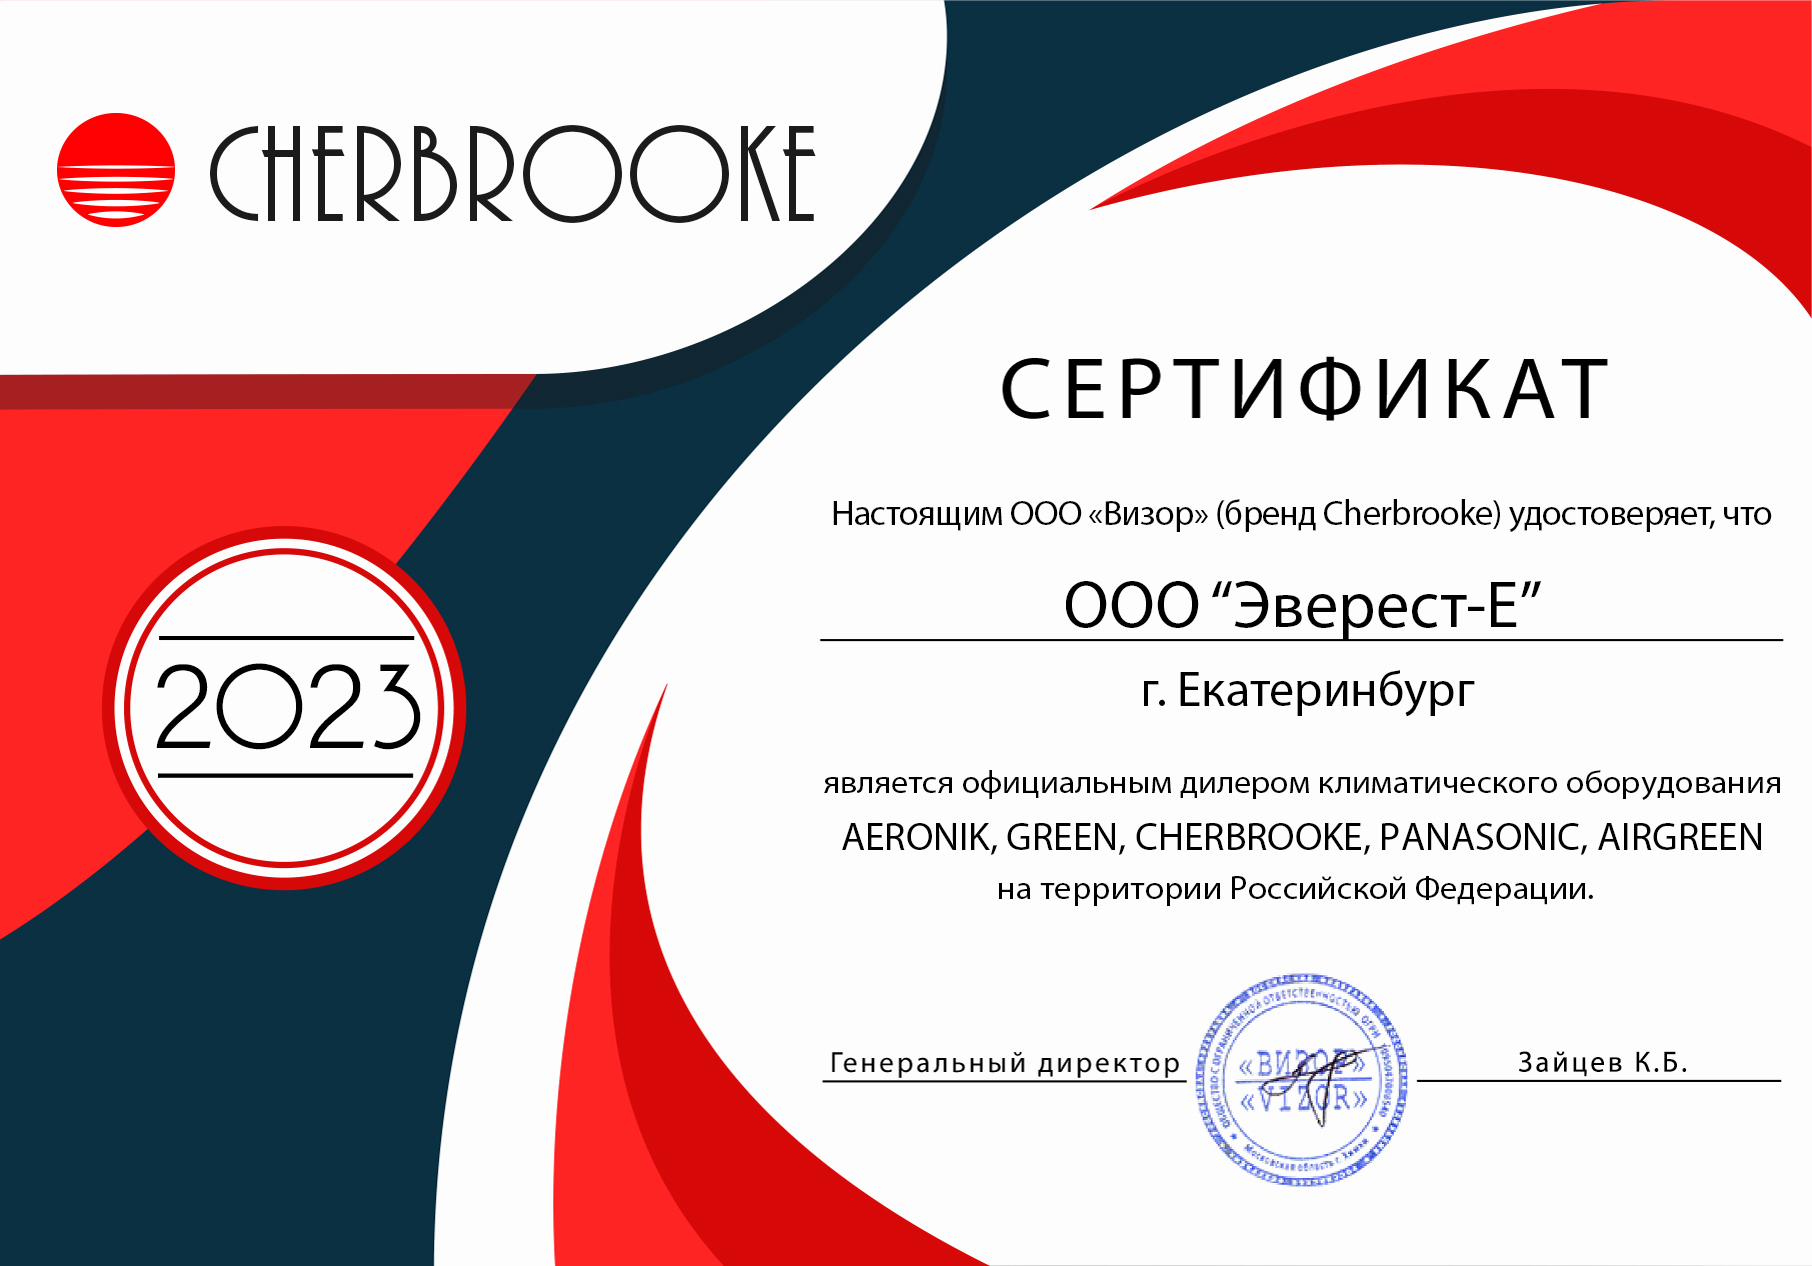 sert_cherbrooke-3 Kondicioner Panasonic CS-E9RKDW / CU-E9RKD kypit v Ekaterinbyrge v internet-magazine KlimatMarket96.ry Сертификат официального дилера